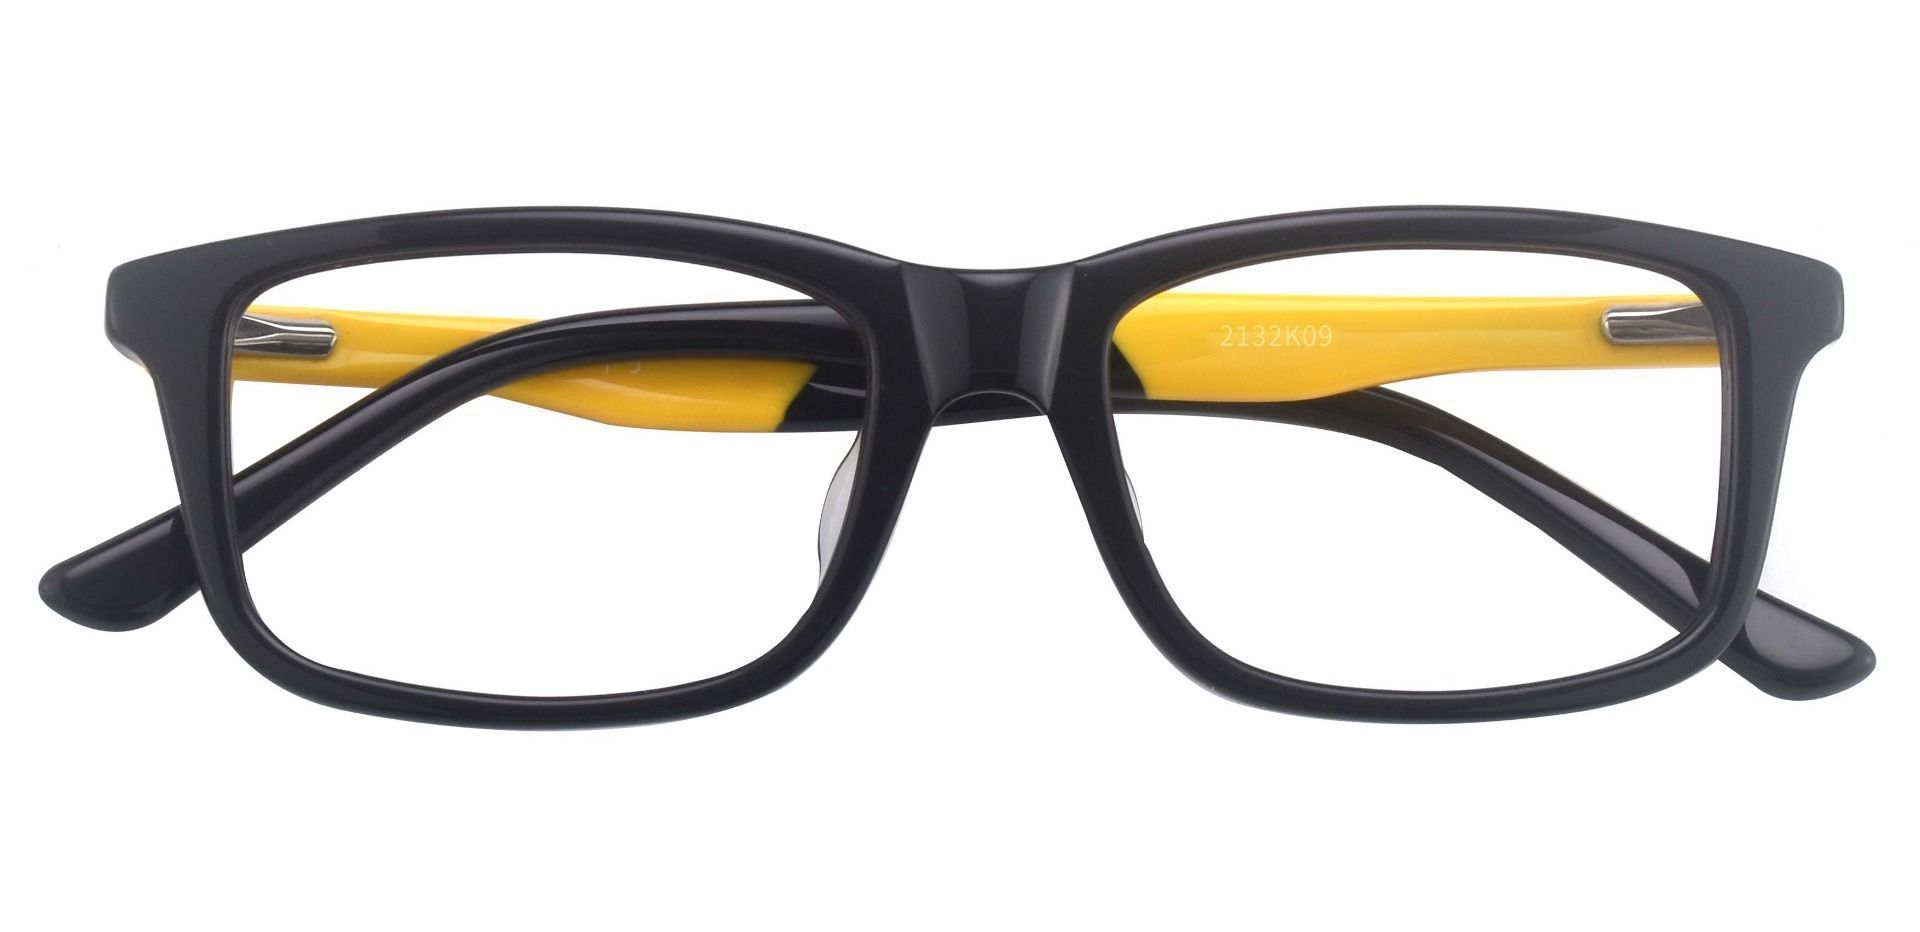 Rivers Rectangle Progressive Glasses - Black-yellow